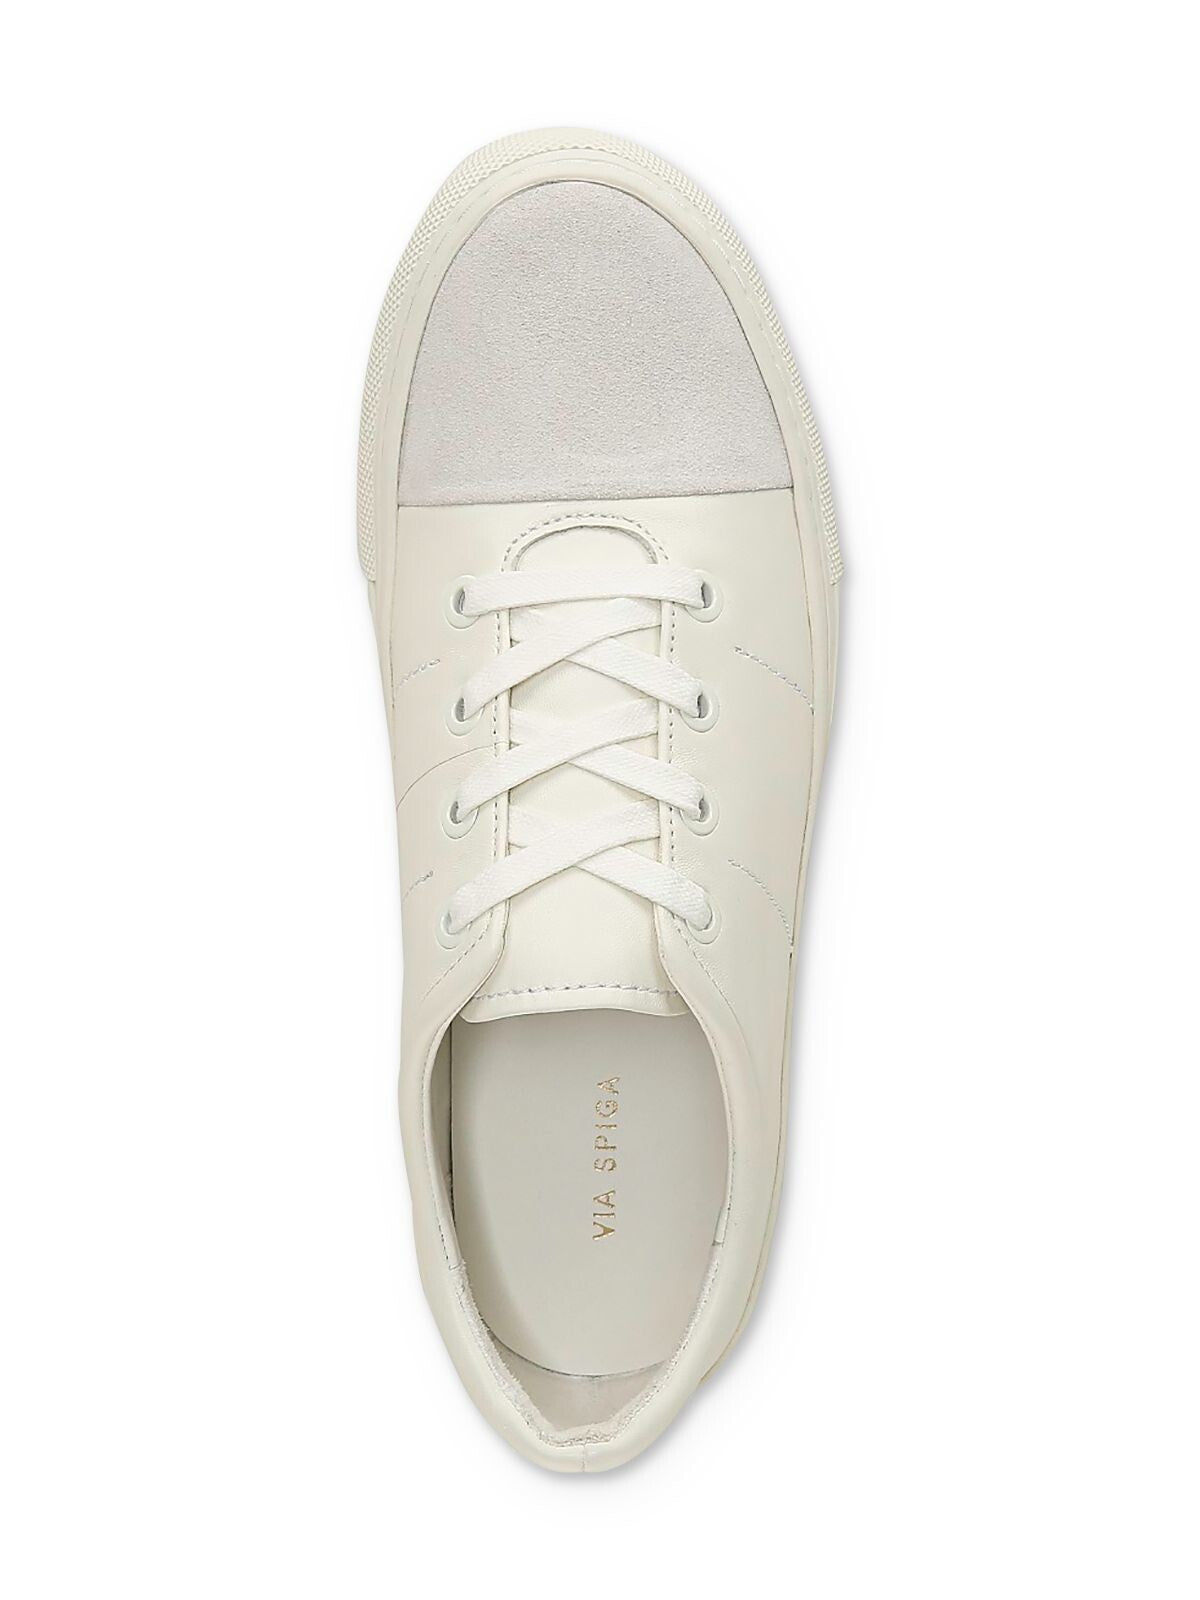 VIA SPIGA Womens White Comfort Sybil Cap Toe Platform Lace-Up Athletic Sneakers Shoes 6 M